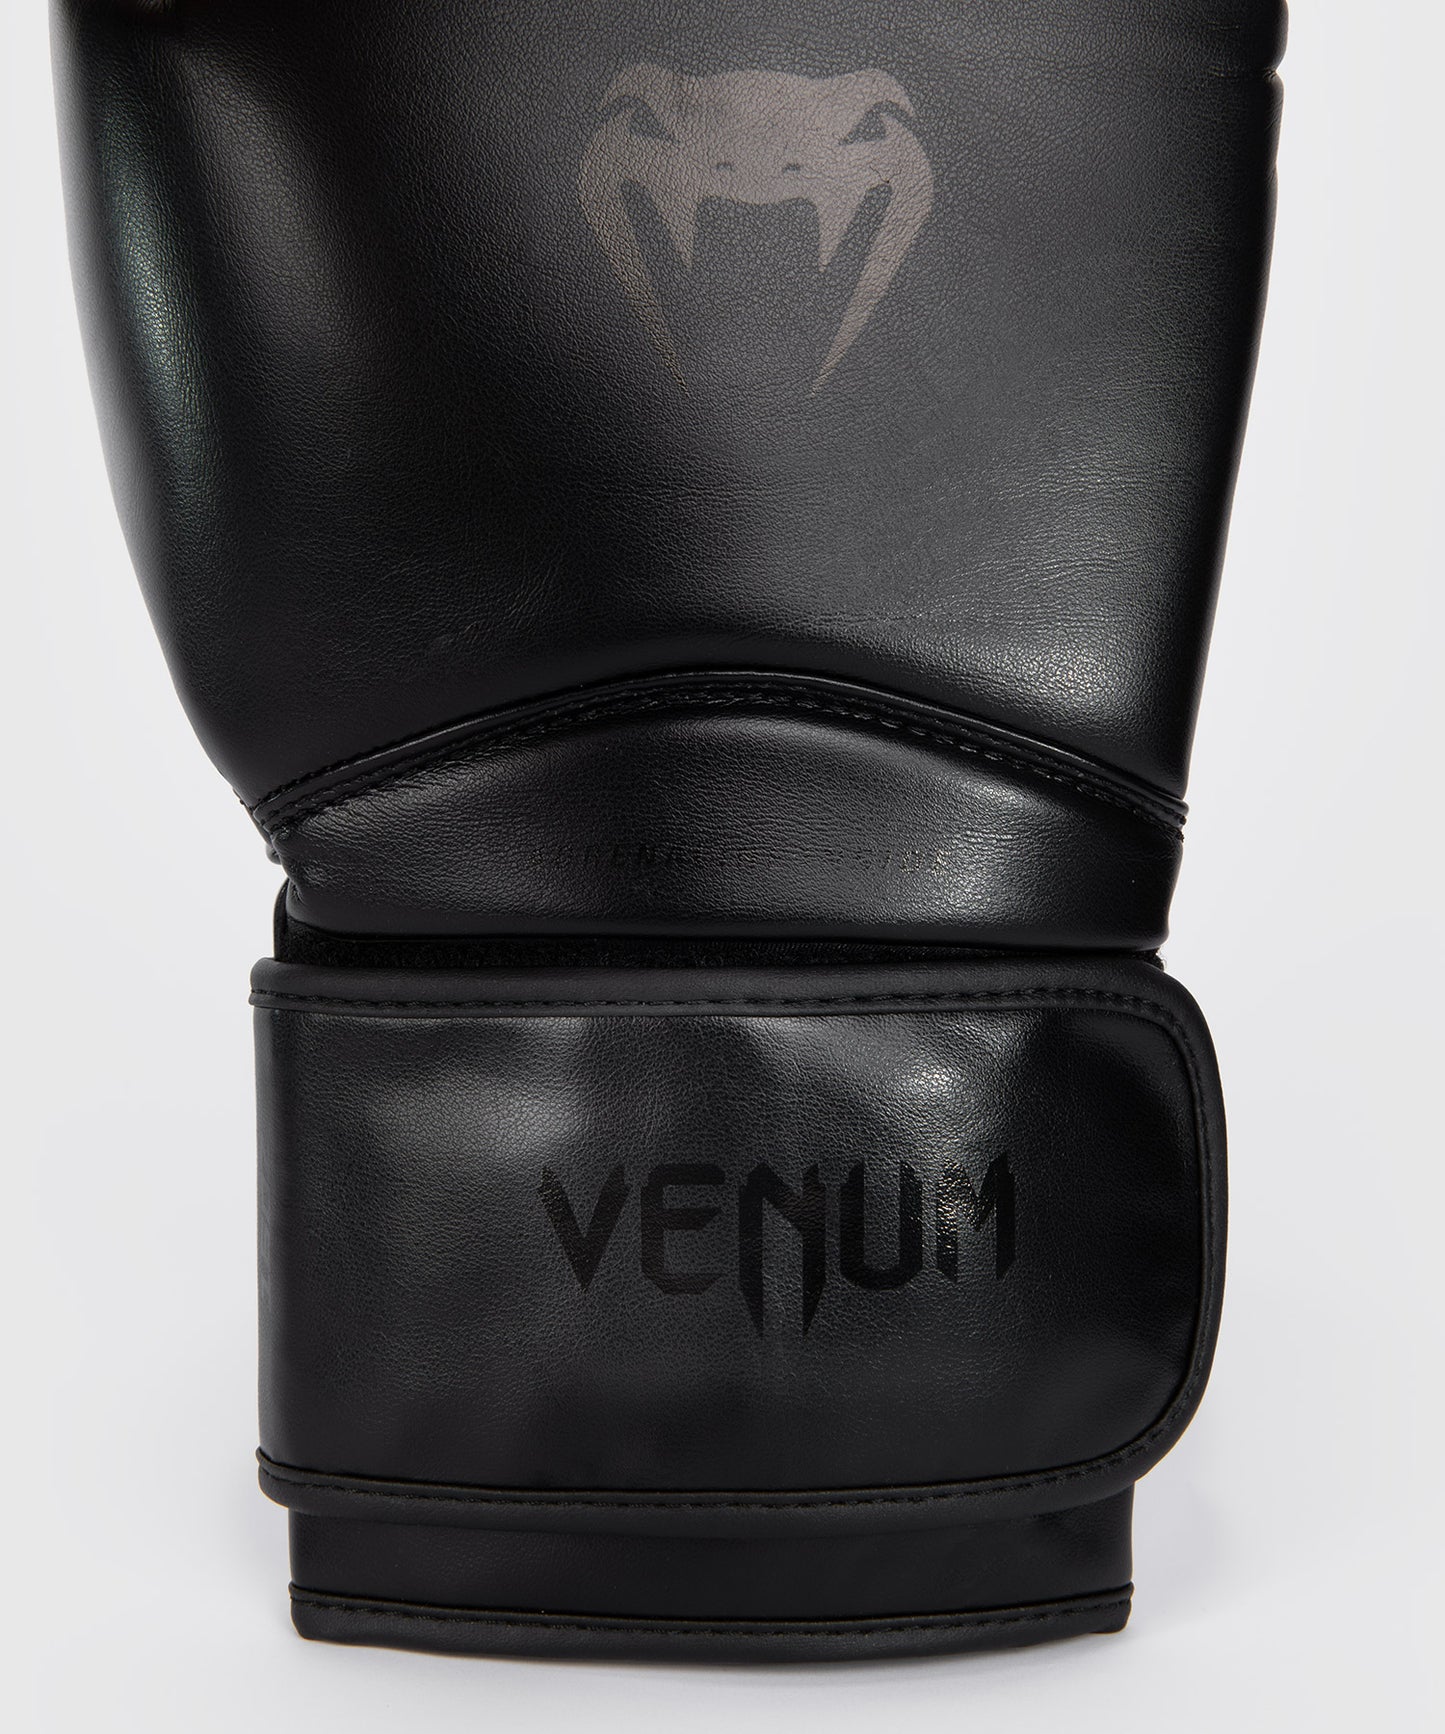 Venum Contender 1.5 Guantes de boxeo - Negro/Negro